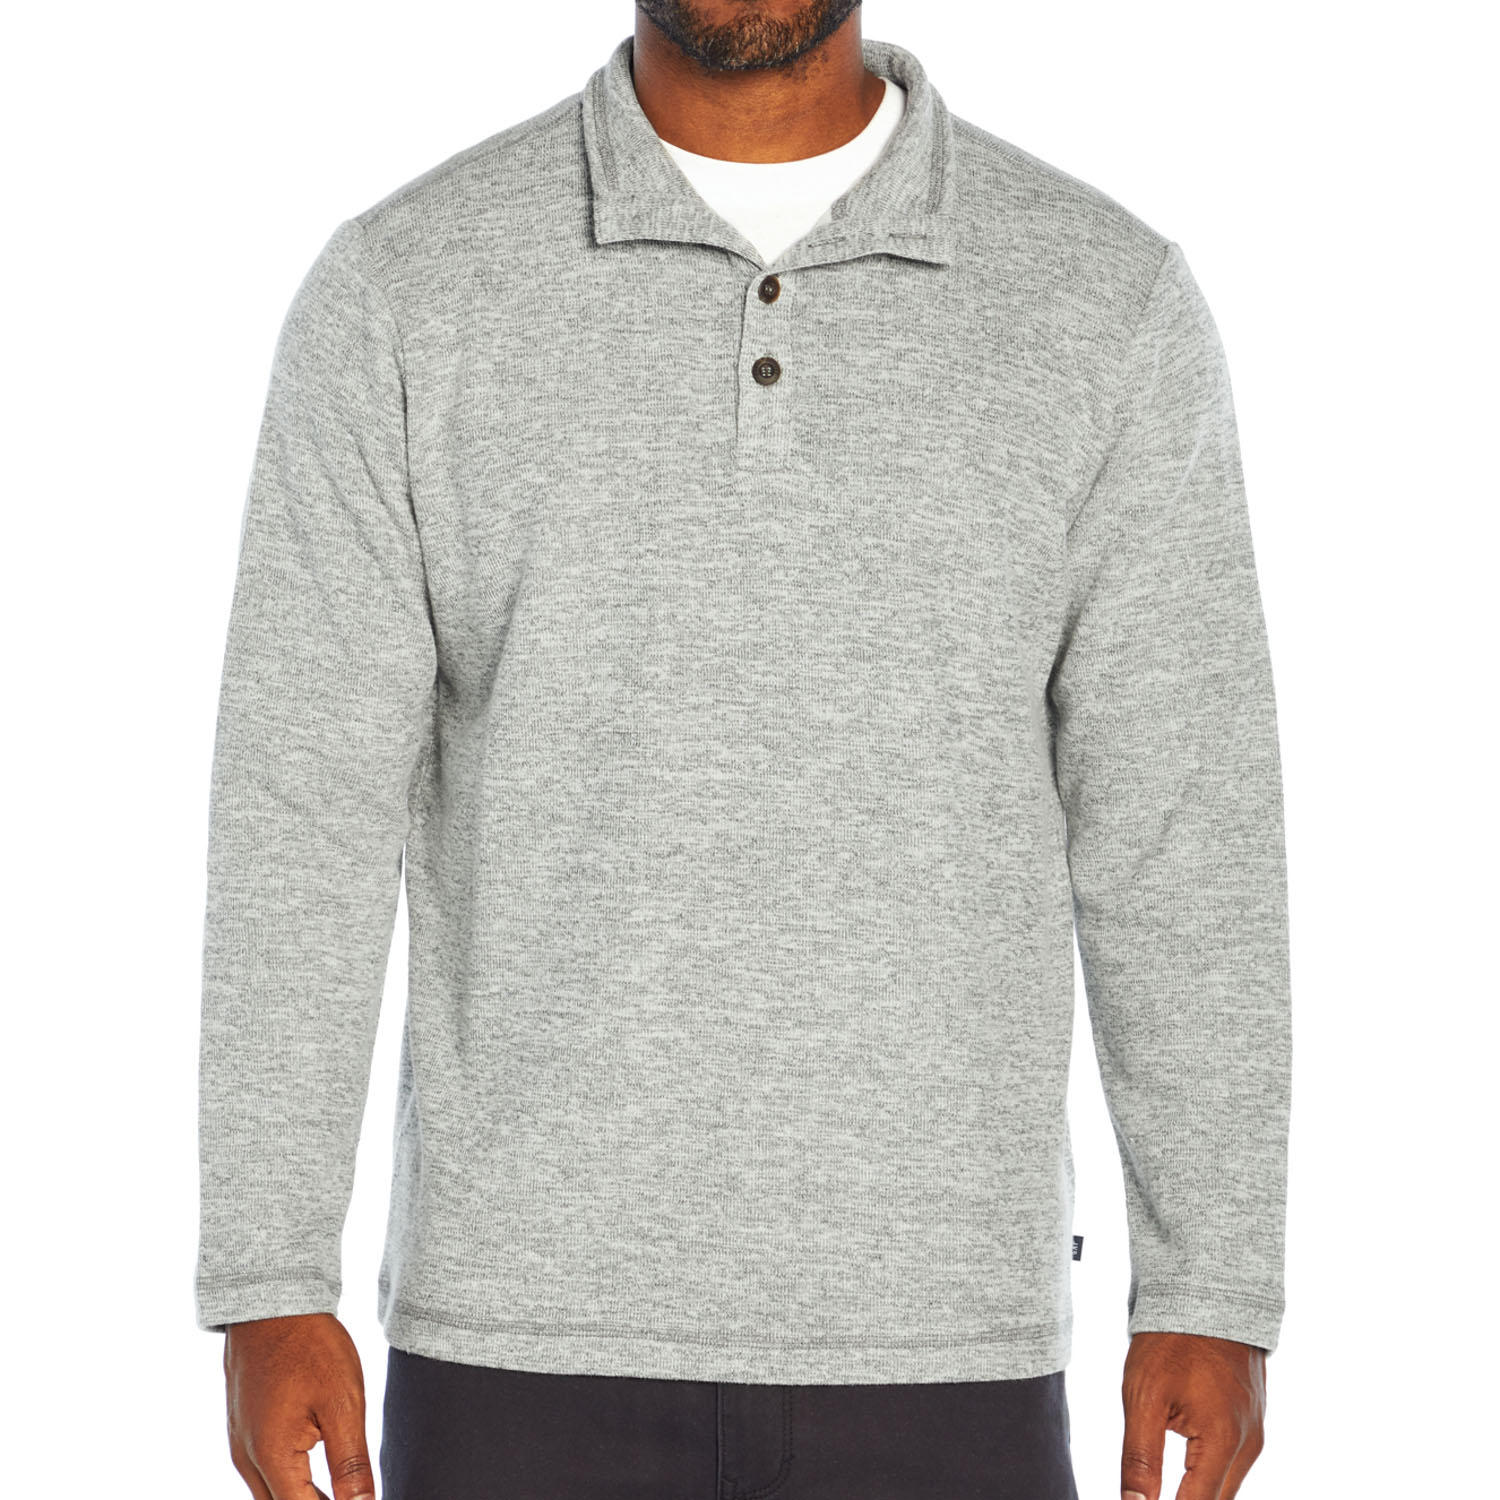 Gap Men’s Mock Neck Sweaters for $6.81